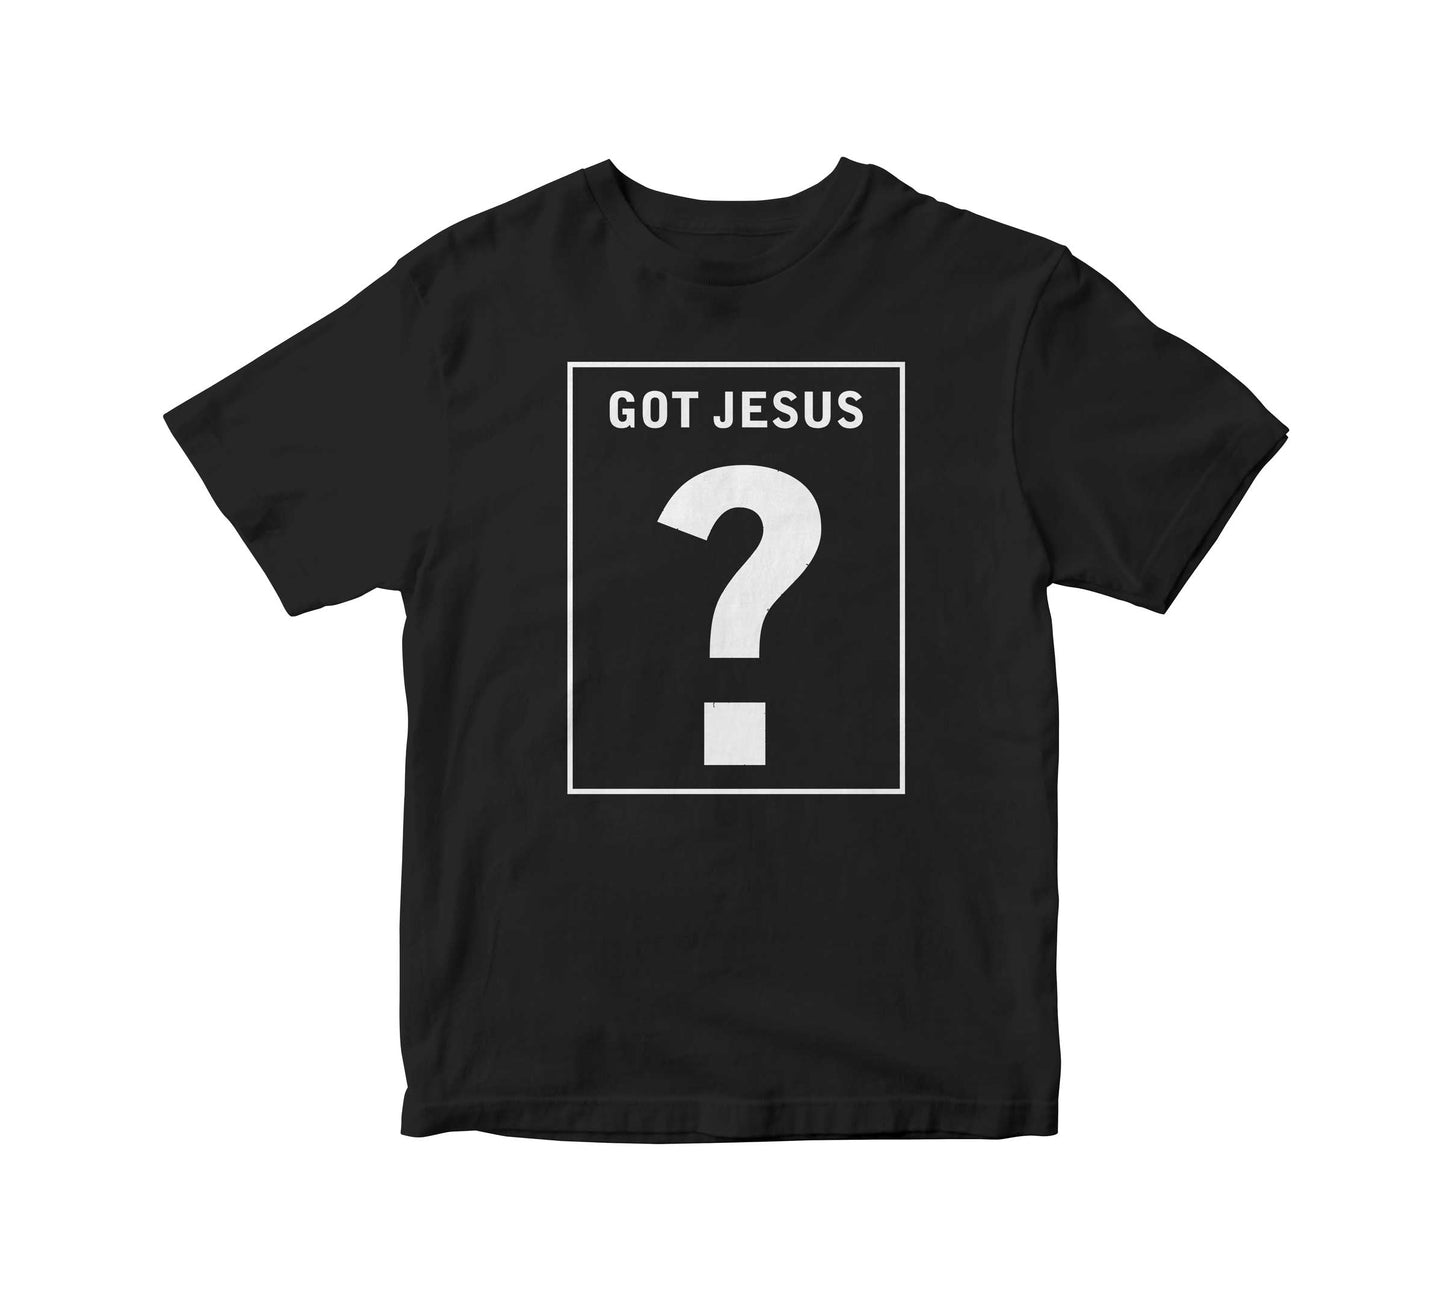 Got Jesus? Kids Unisex T-Shirt